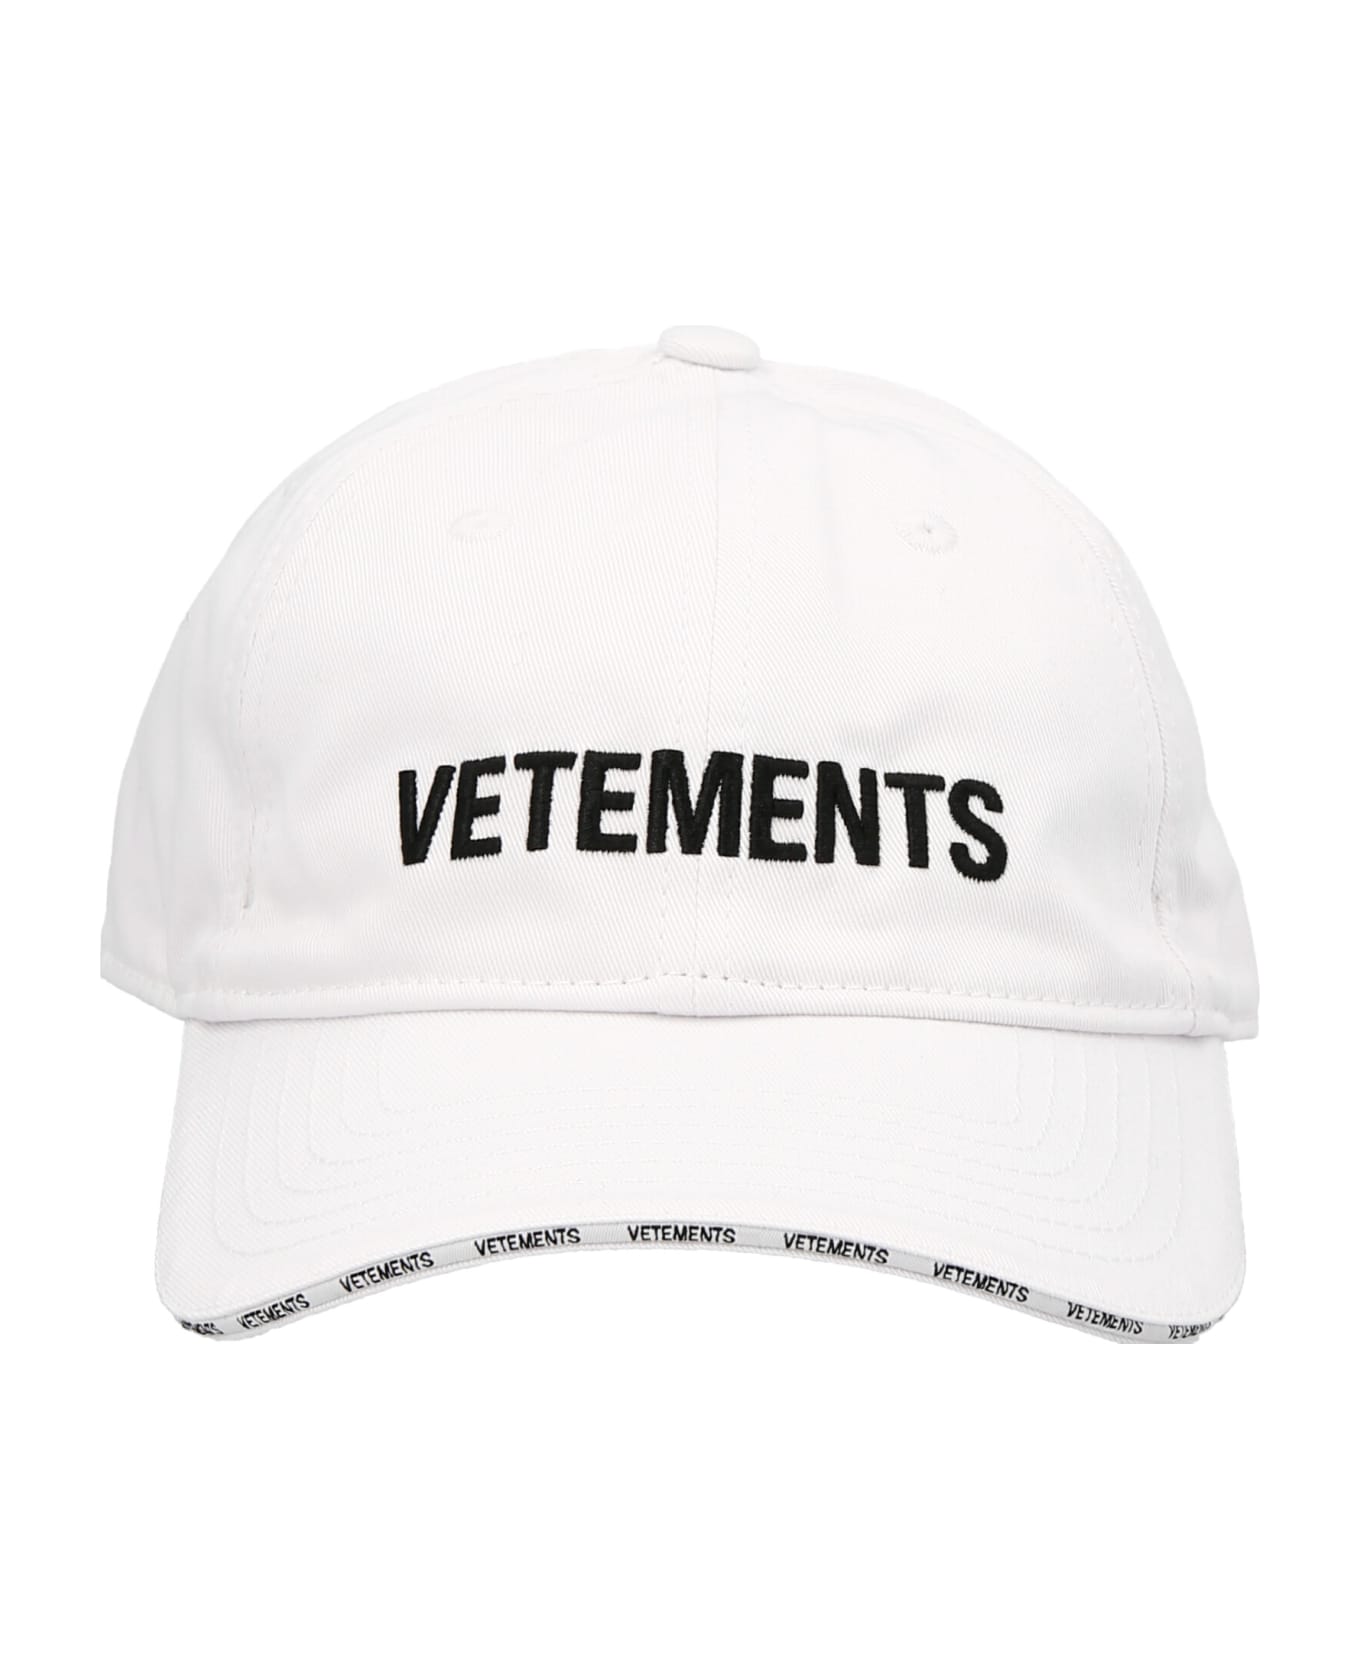 VETEMENTS Logo Embroidery Cap - White/Black